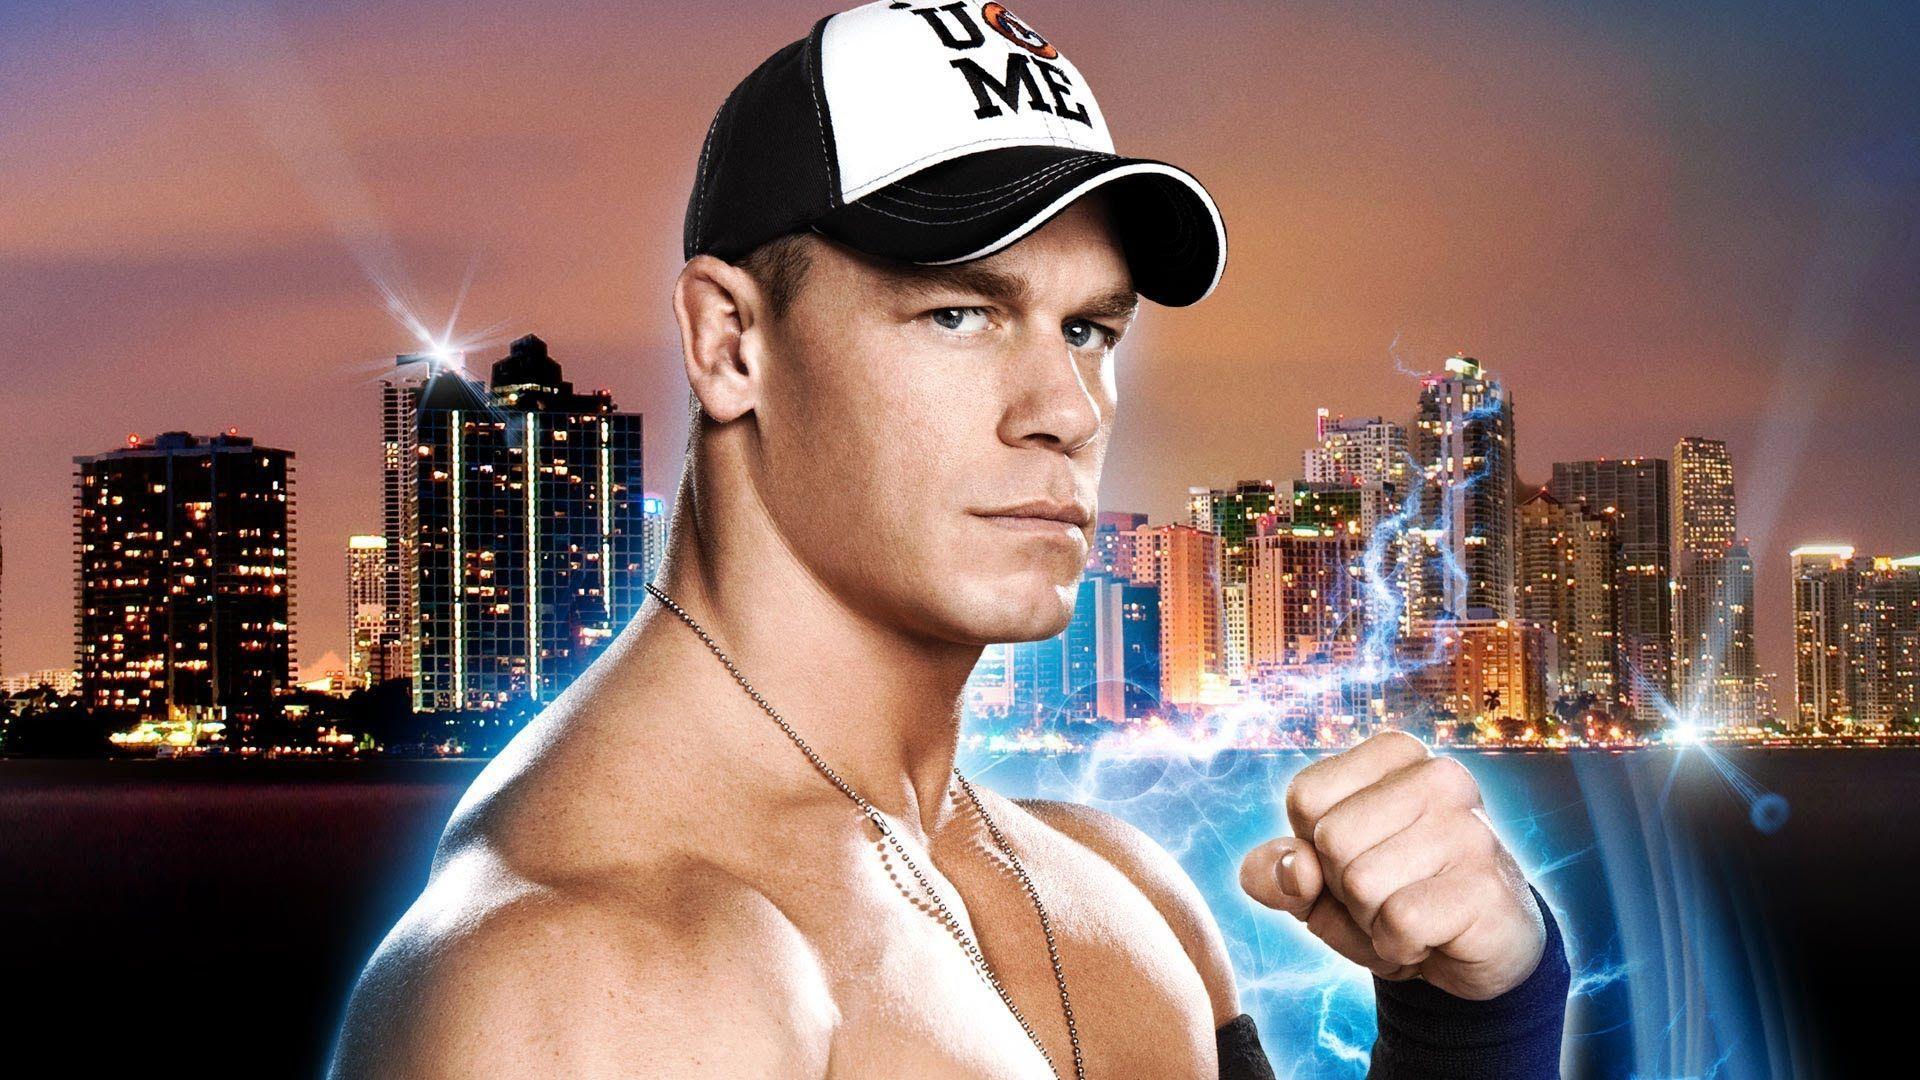 John Cena Full HD Wallpaper